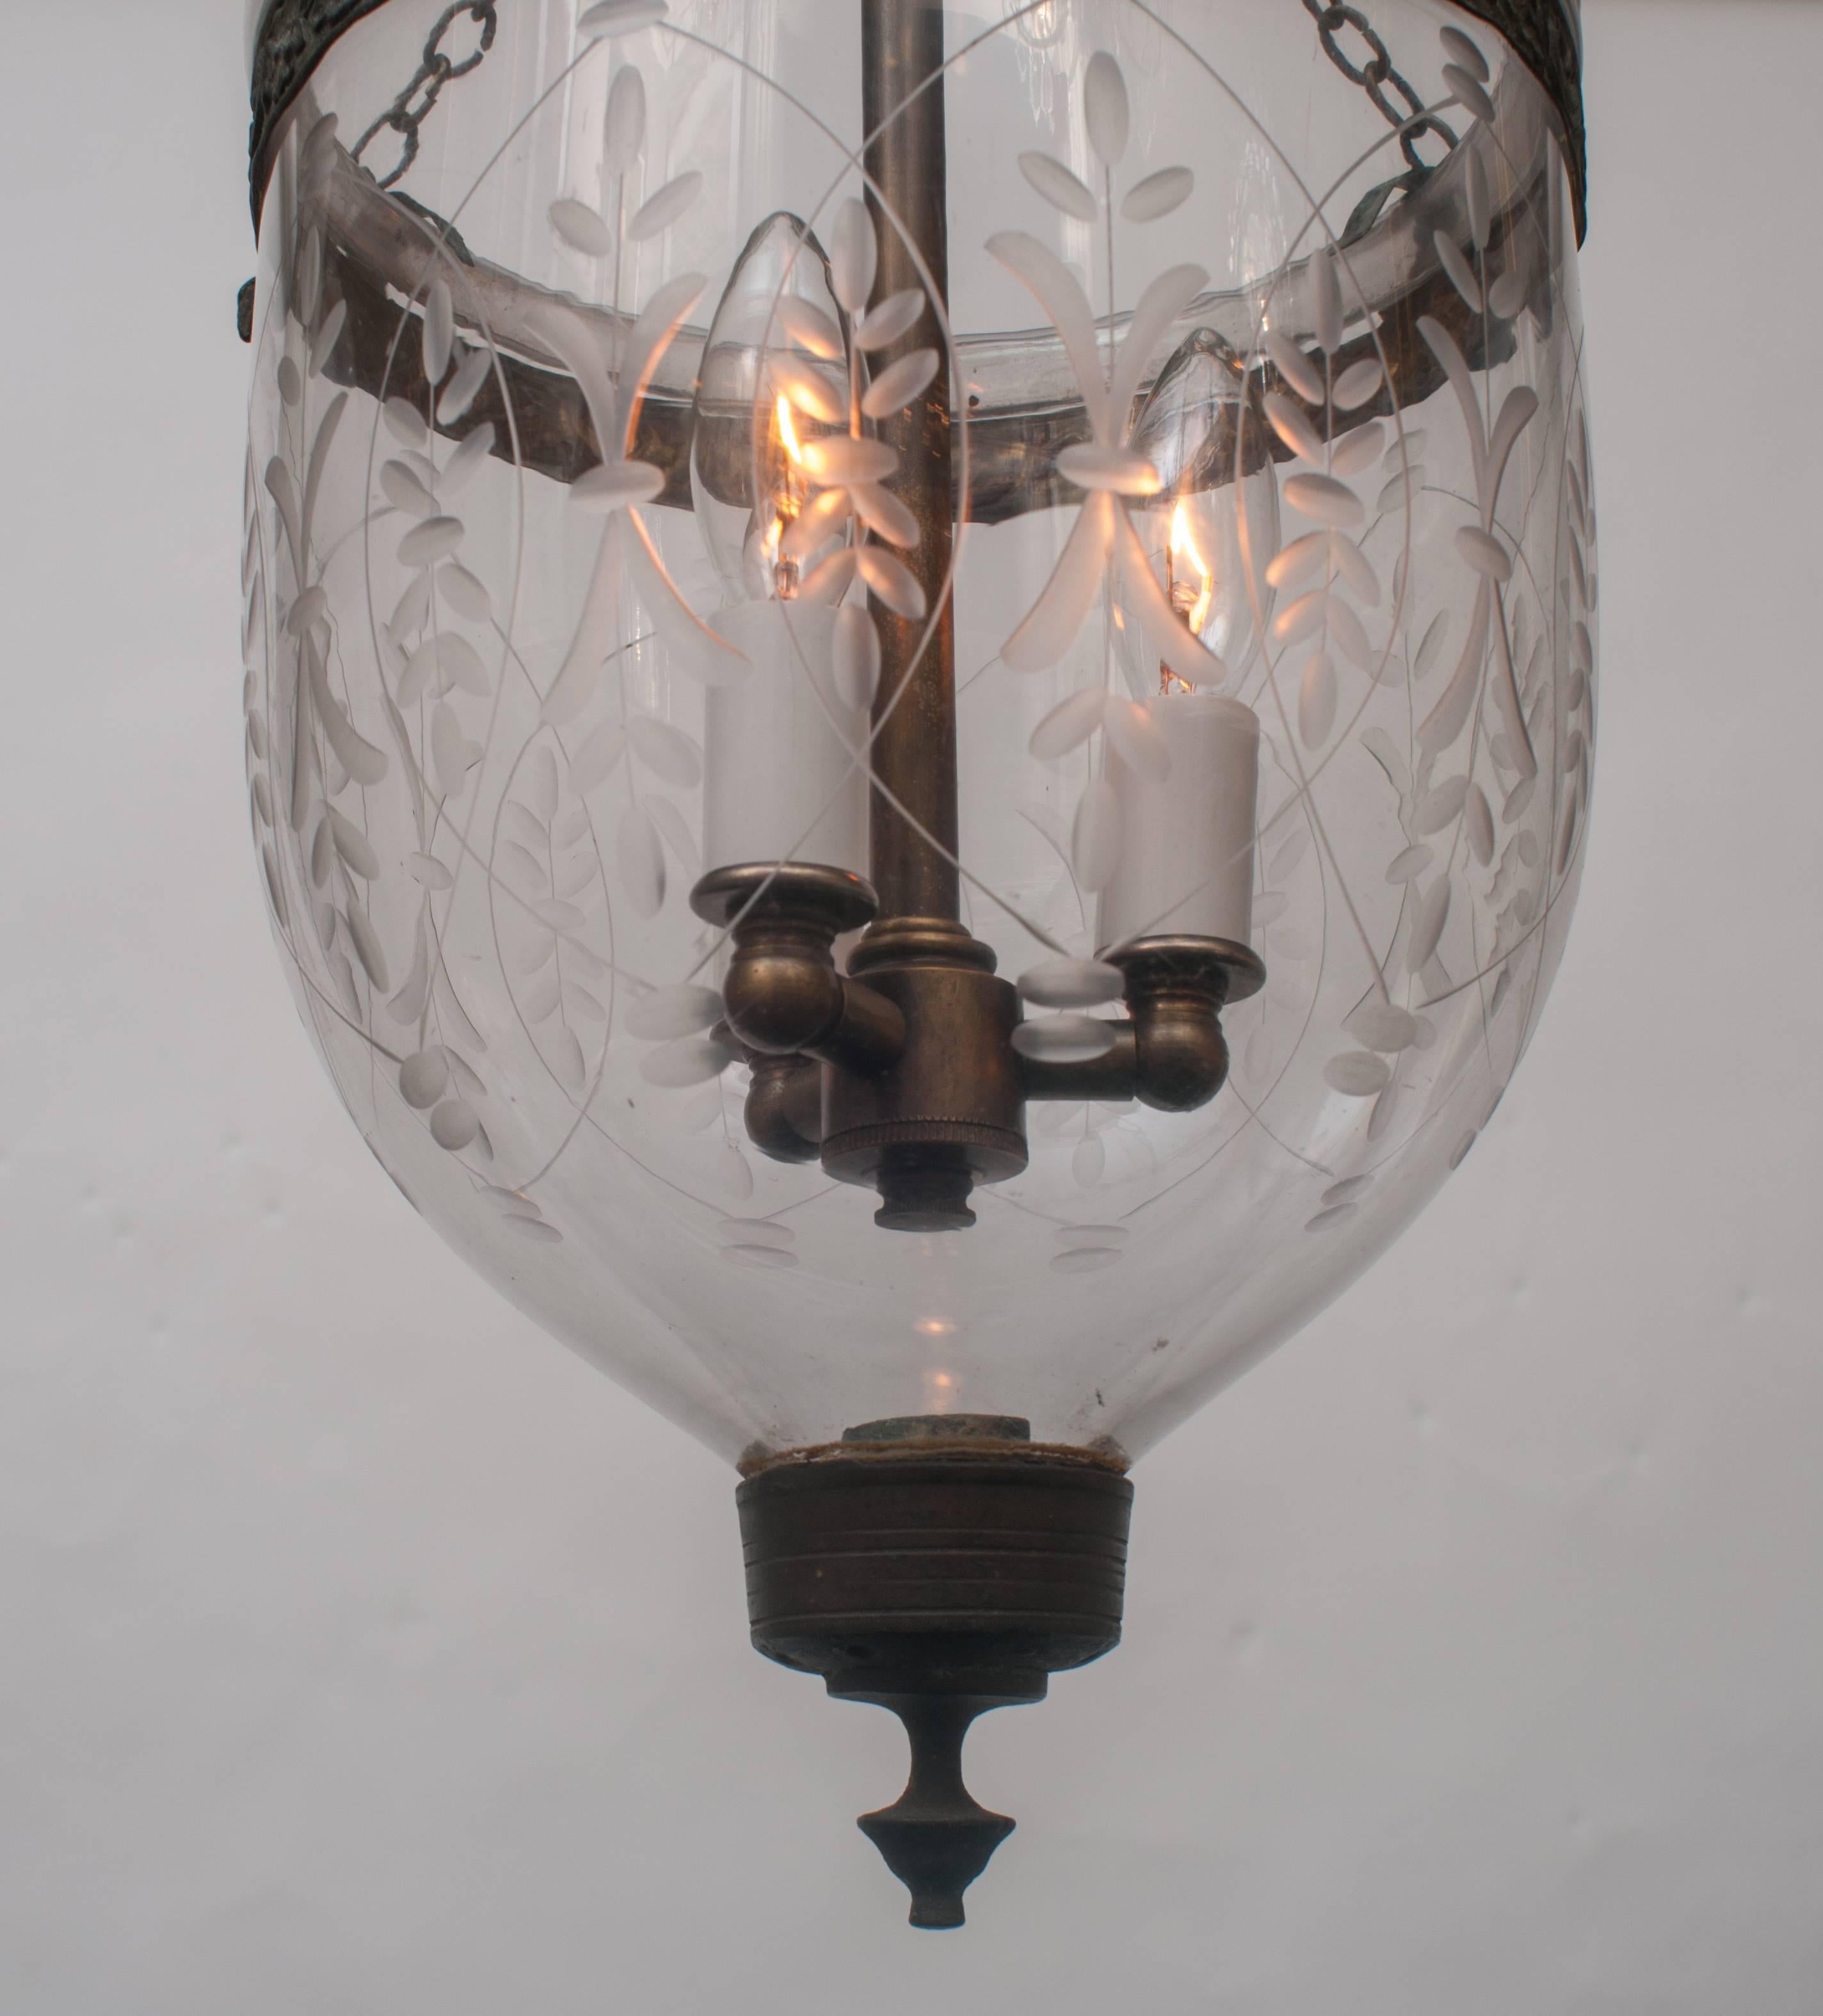 English Handblown Bell Jar Lantern with Brass Finial